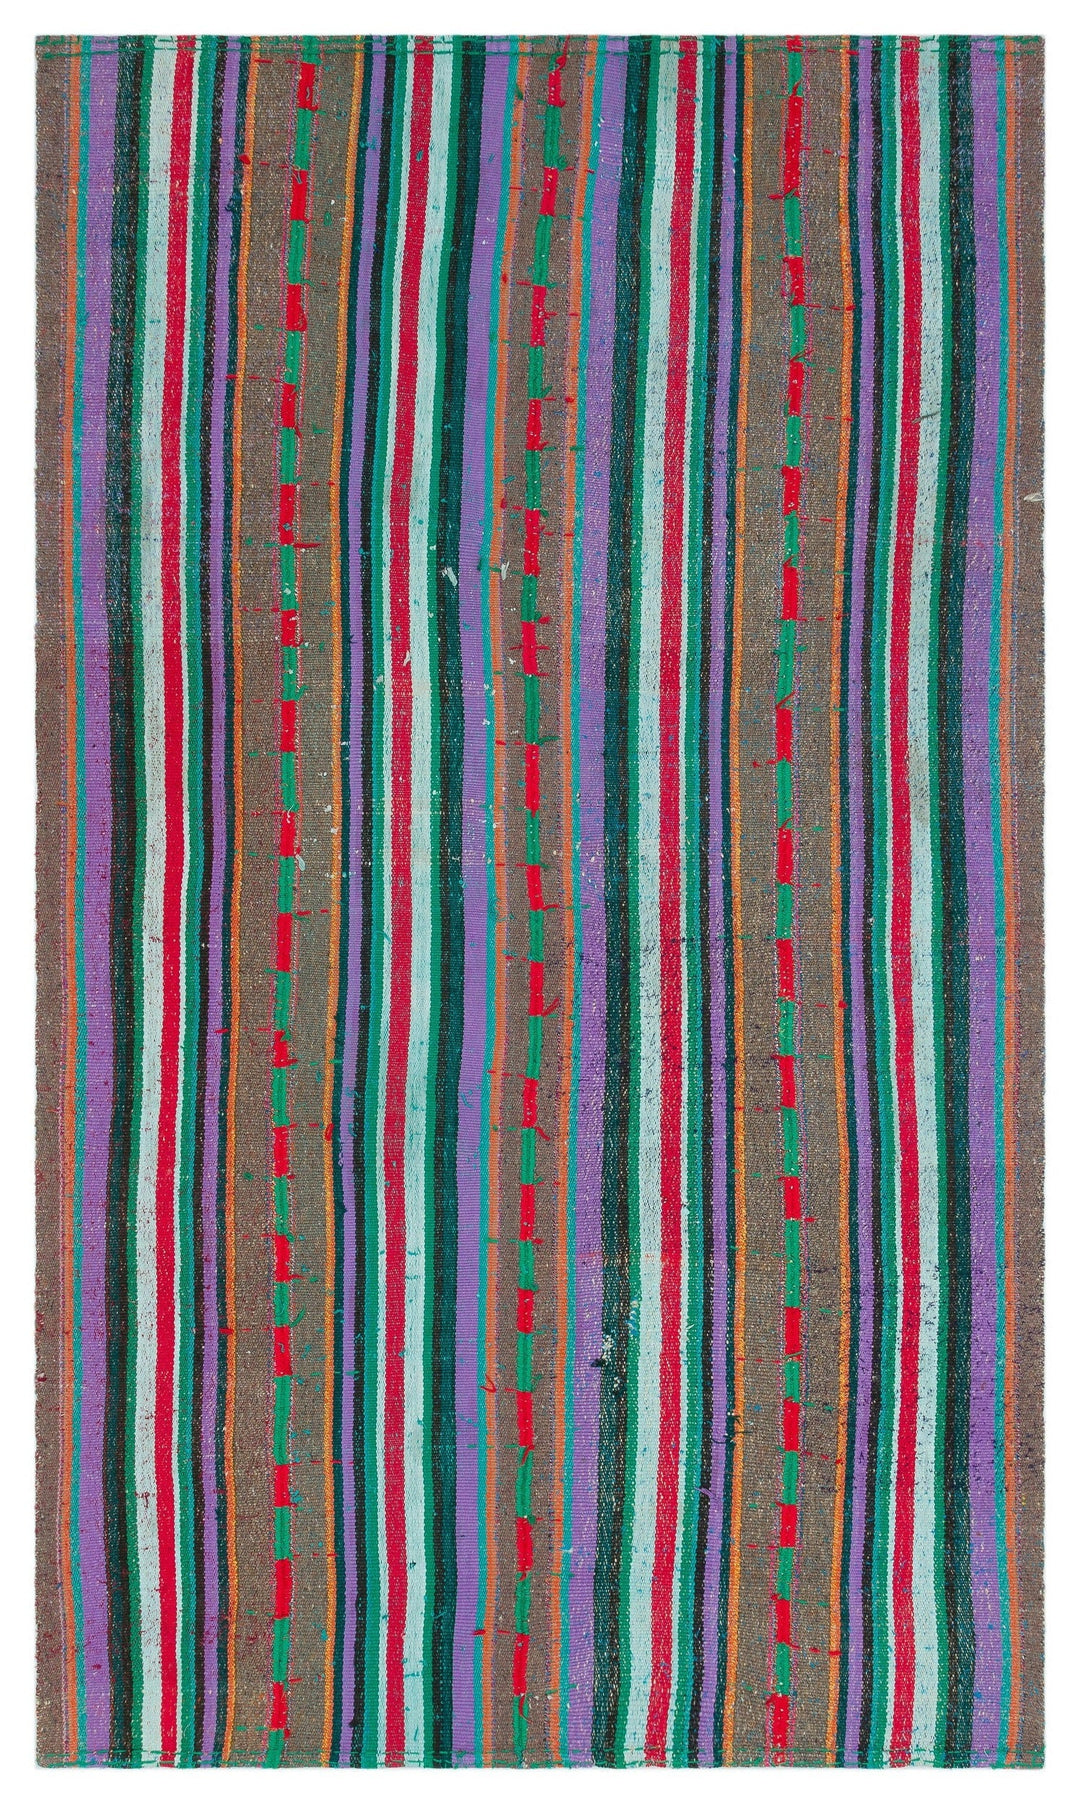 Cretan Beige Striped Wool Hand-Woven Carpet 131 x 227